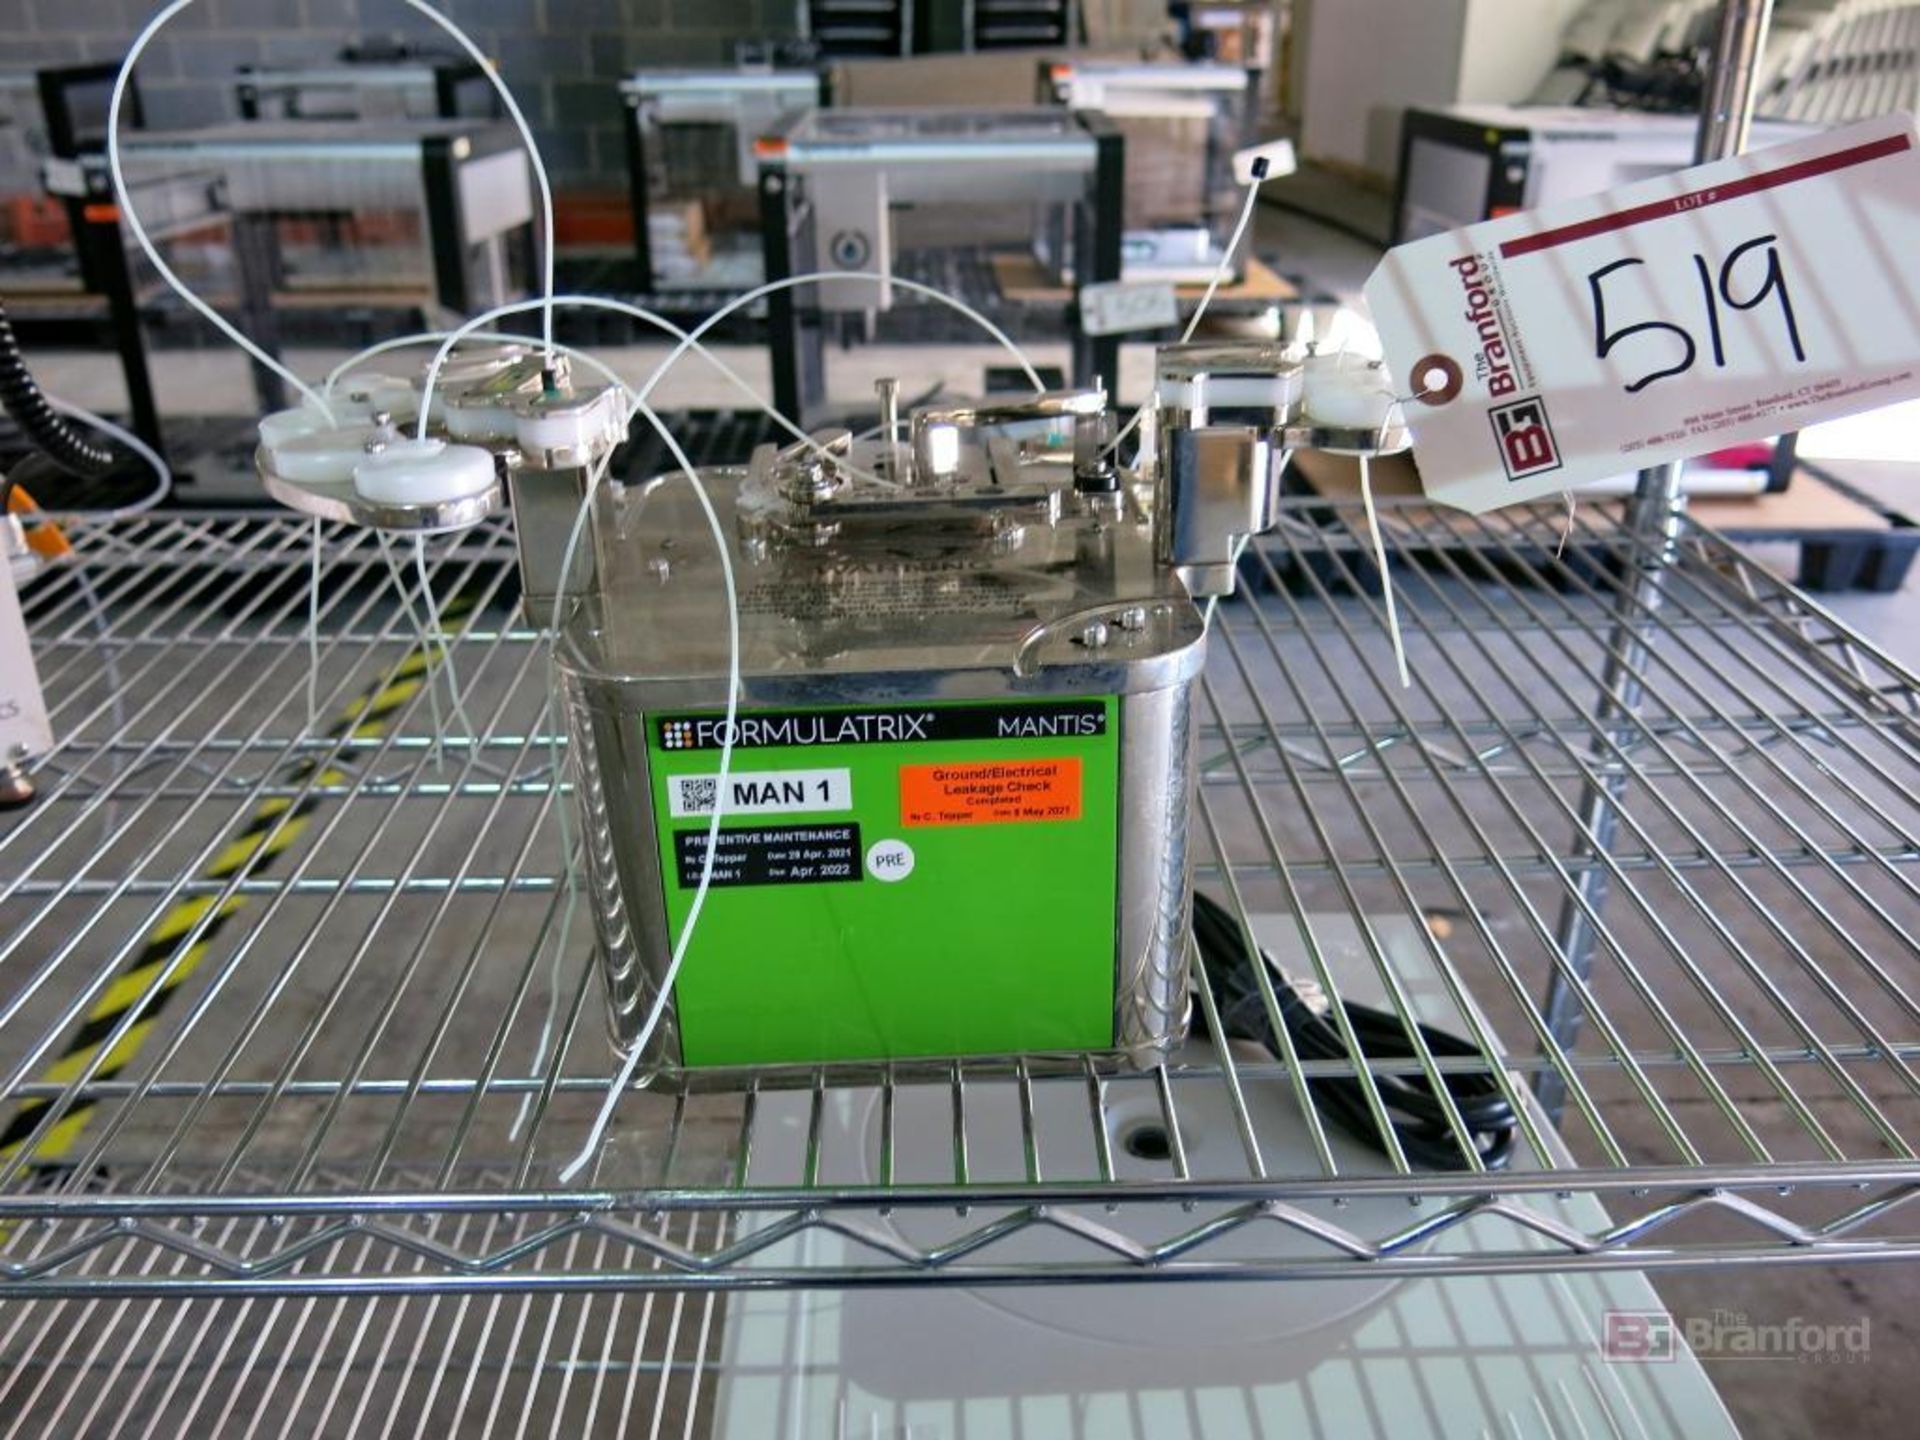 Formulatrix Mantis Robotic Liquid Handling Reagent Dispenser